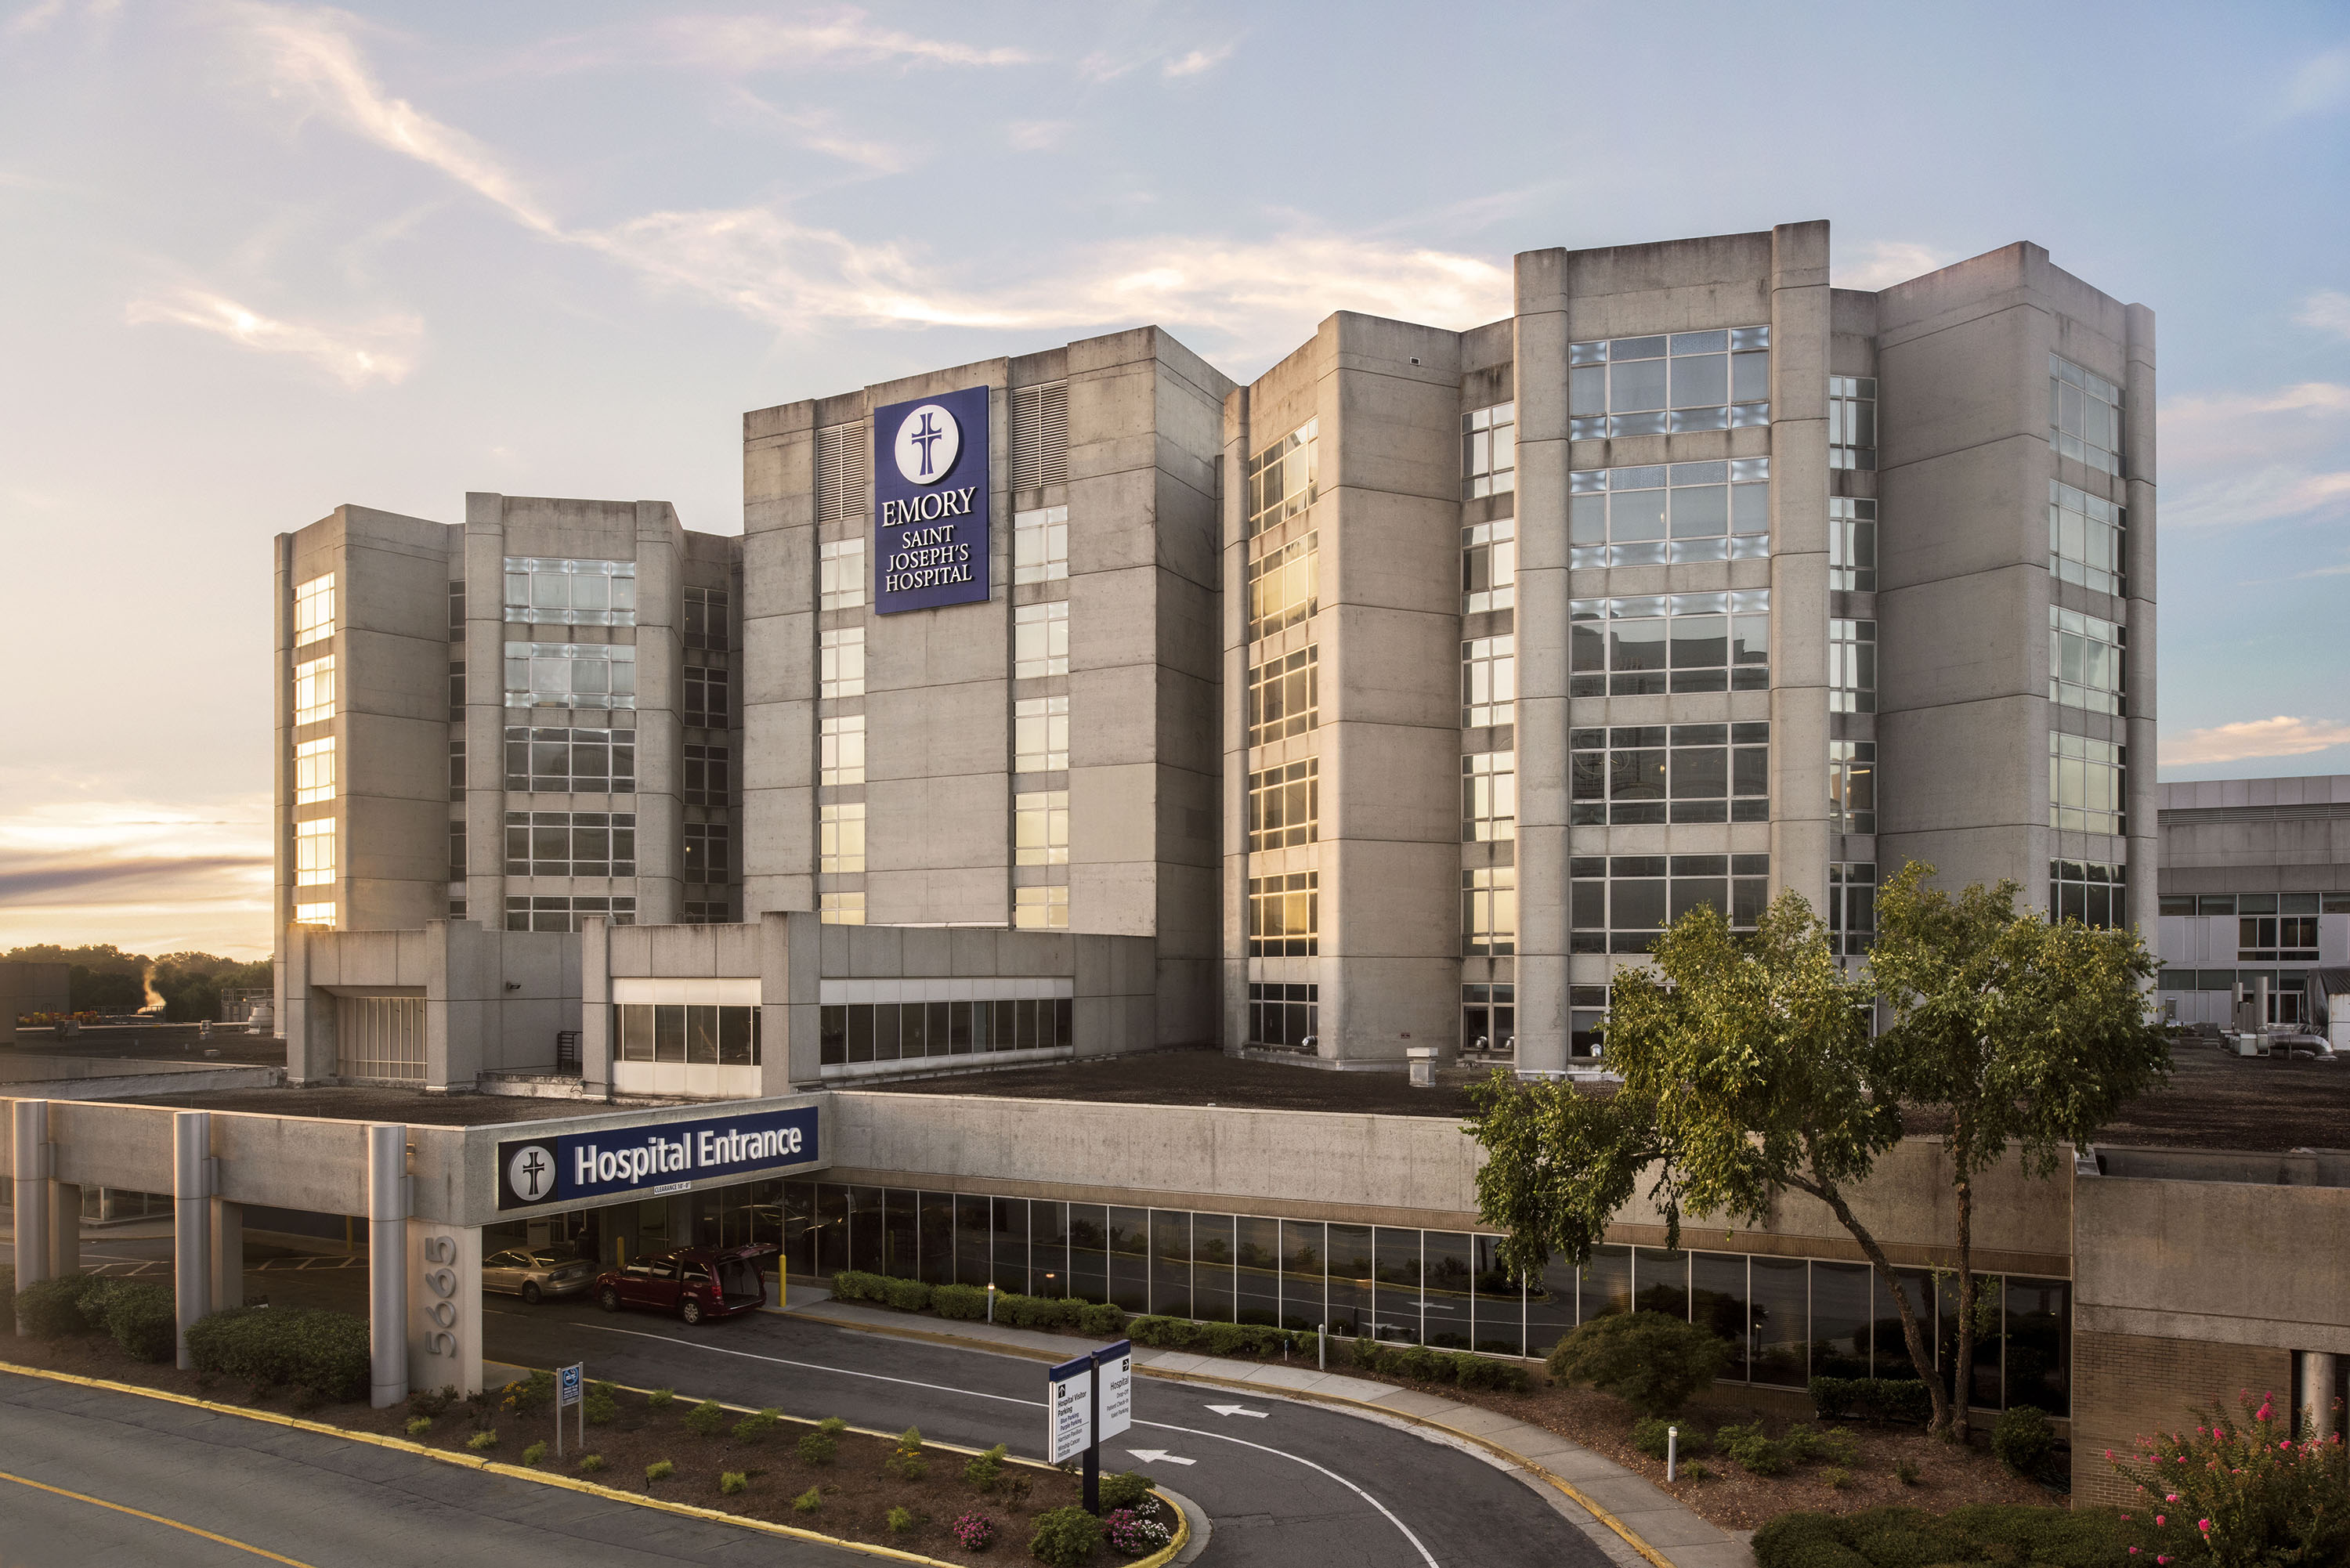 Emory Saint Joseph’s Hospital achieves seventh consecutive Magnet designation for nursing excellence